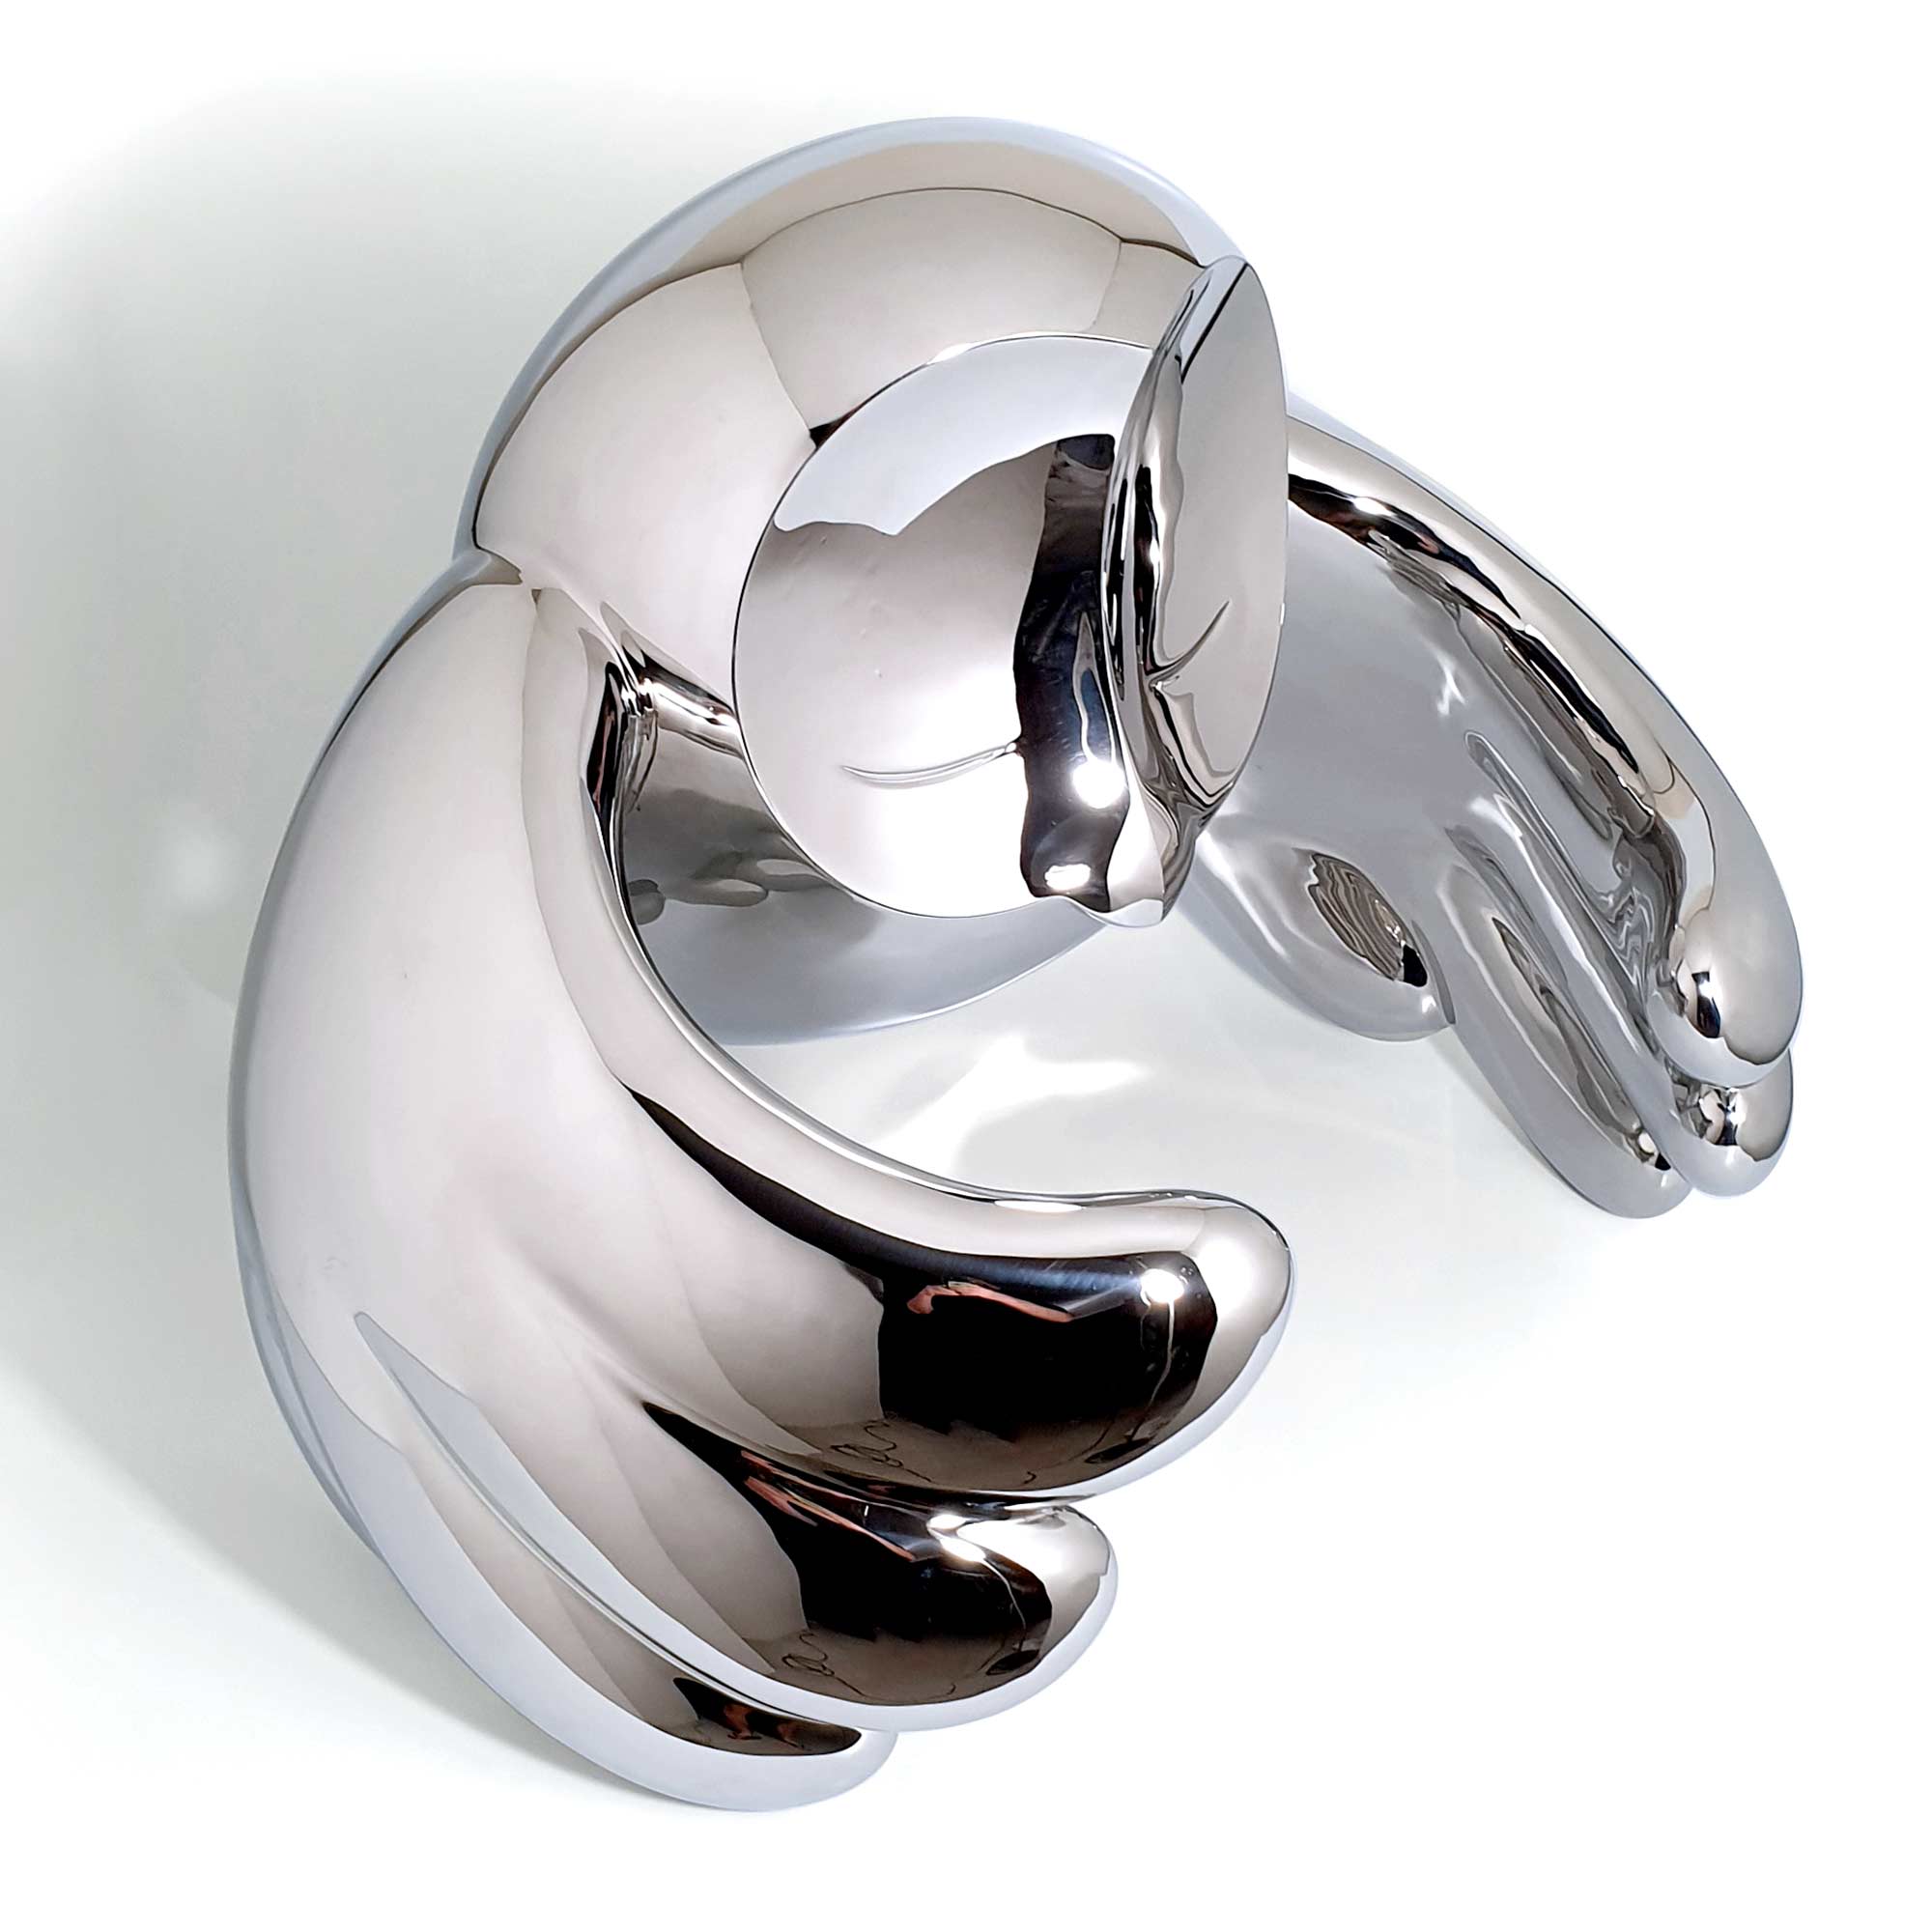 Wind Beneath Owl, bird sculpture, Mirror Polished Stainless Steel Sculpture, by artist Ferdi B Dick, top view